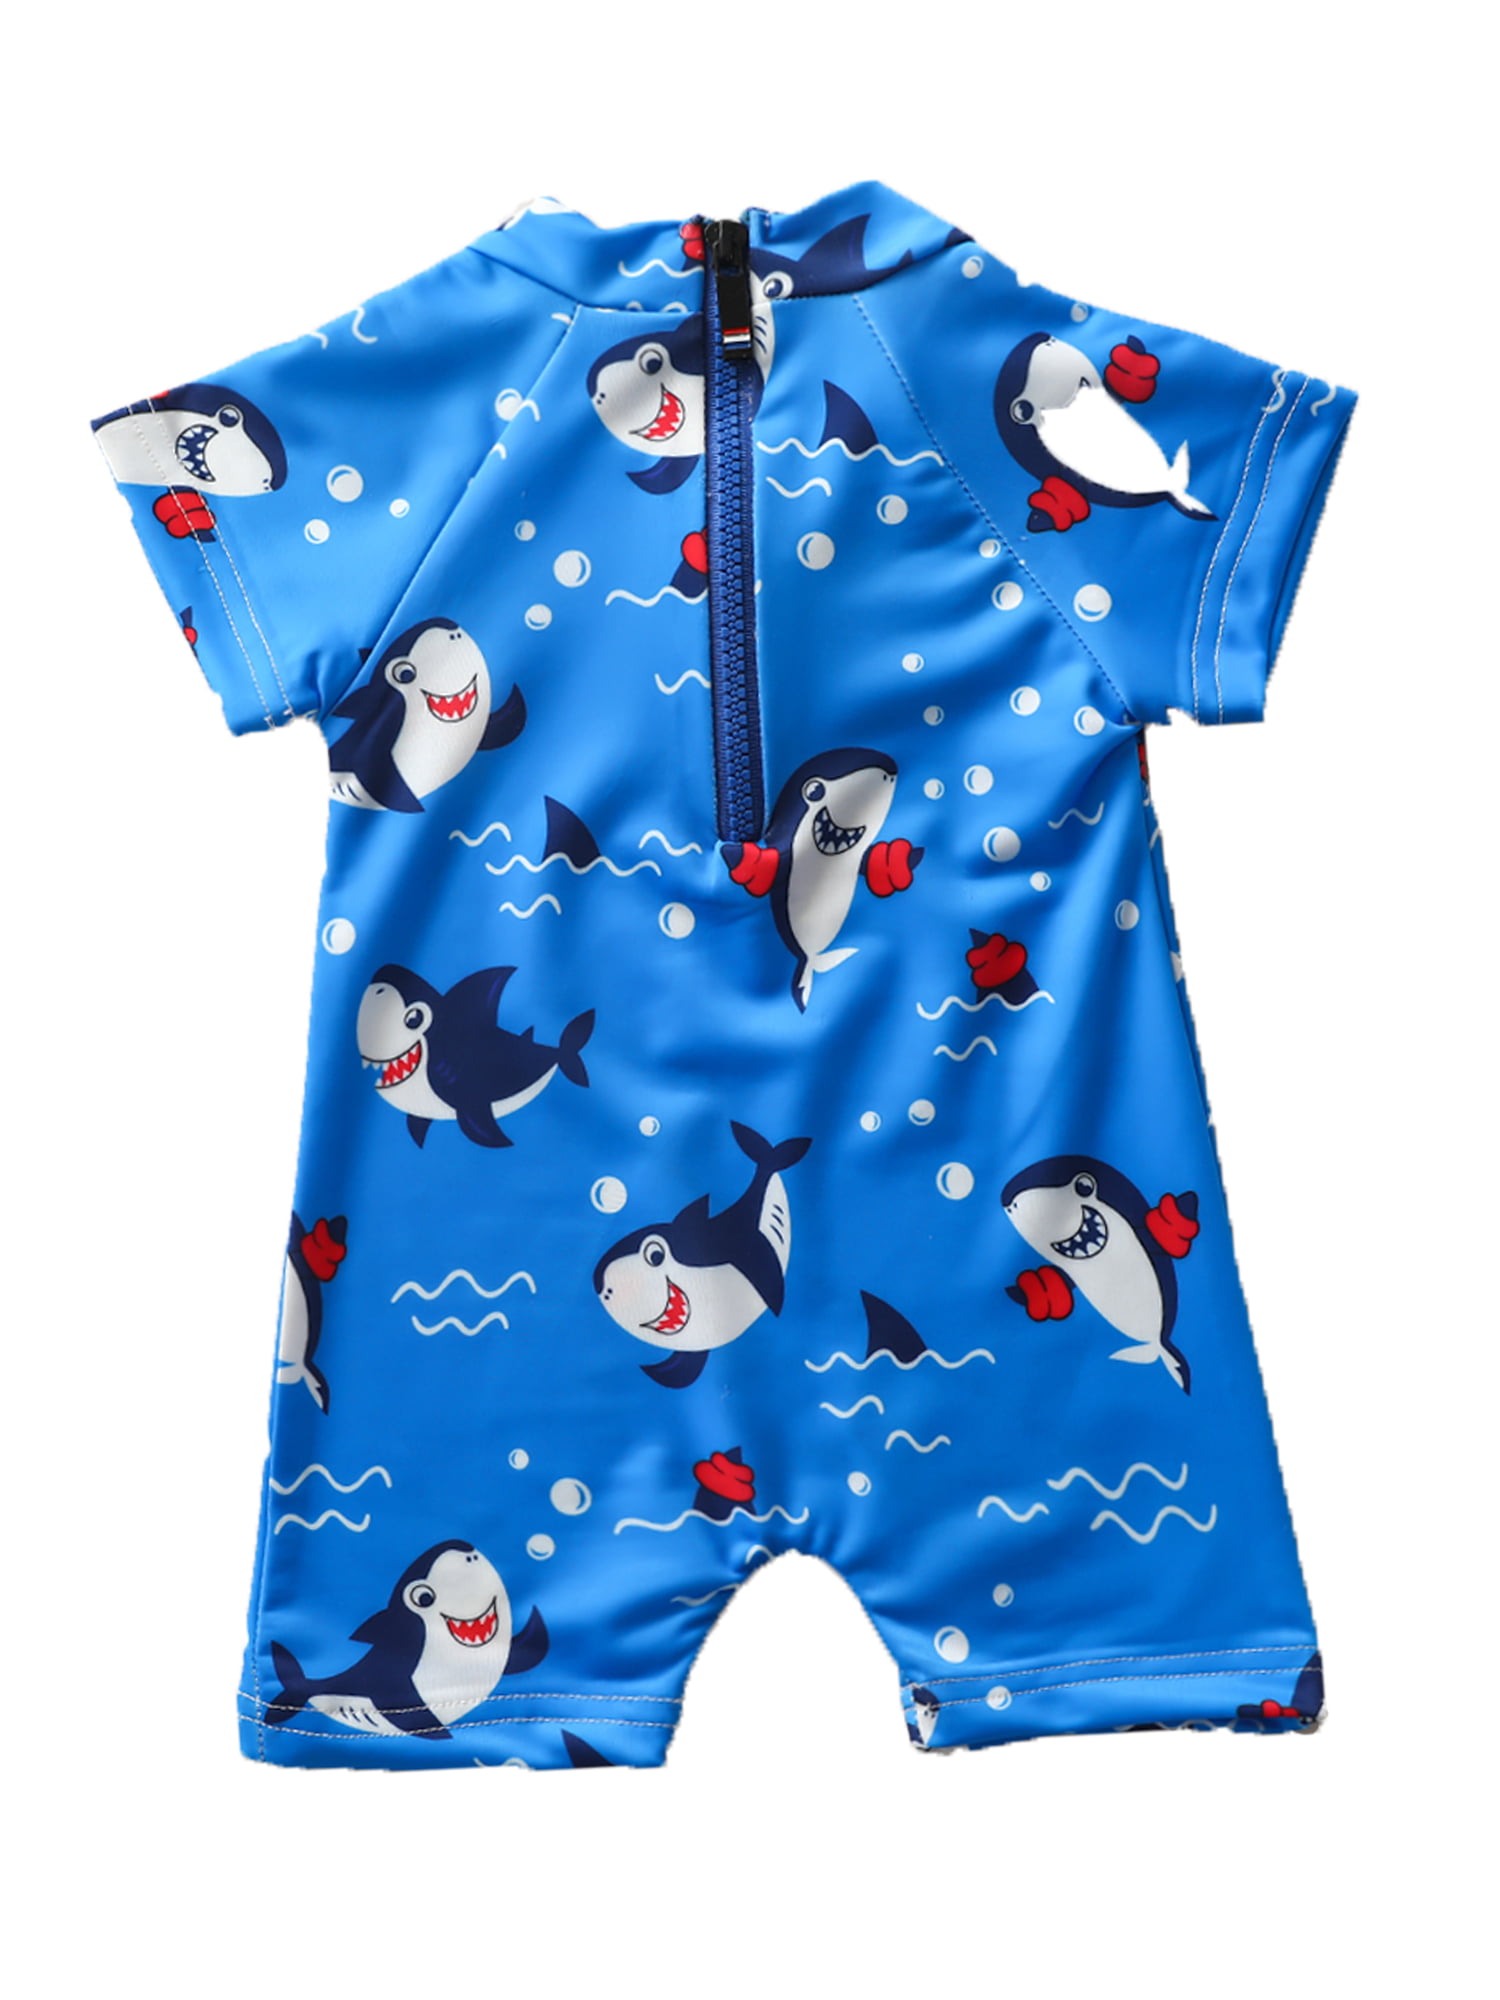 mini eggs Children's Swimsuit Boys UV Baby Bathing Suit Kids One Piece Swimming Suit Toddler Boy Swimwear Beach Clothes 